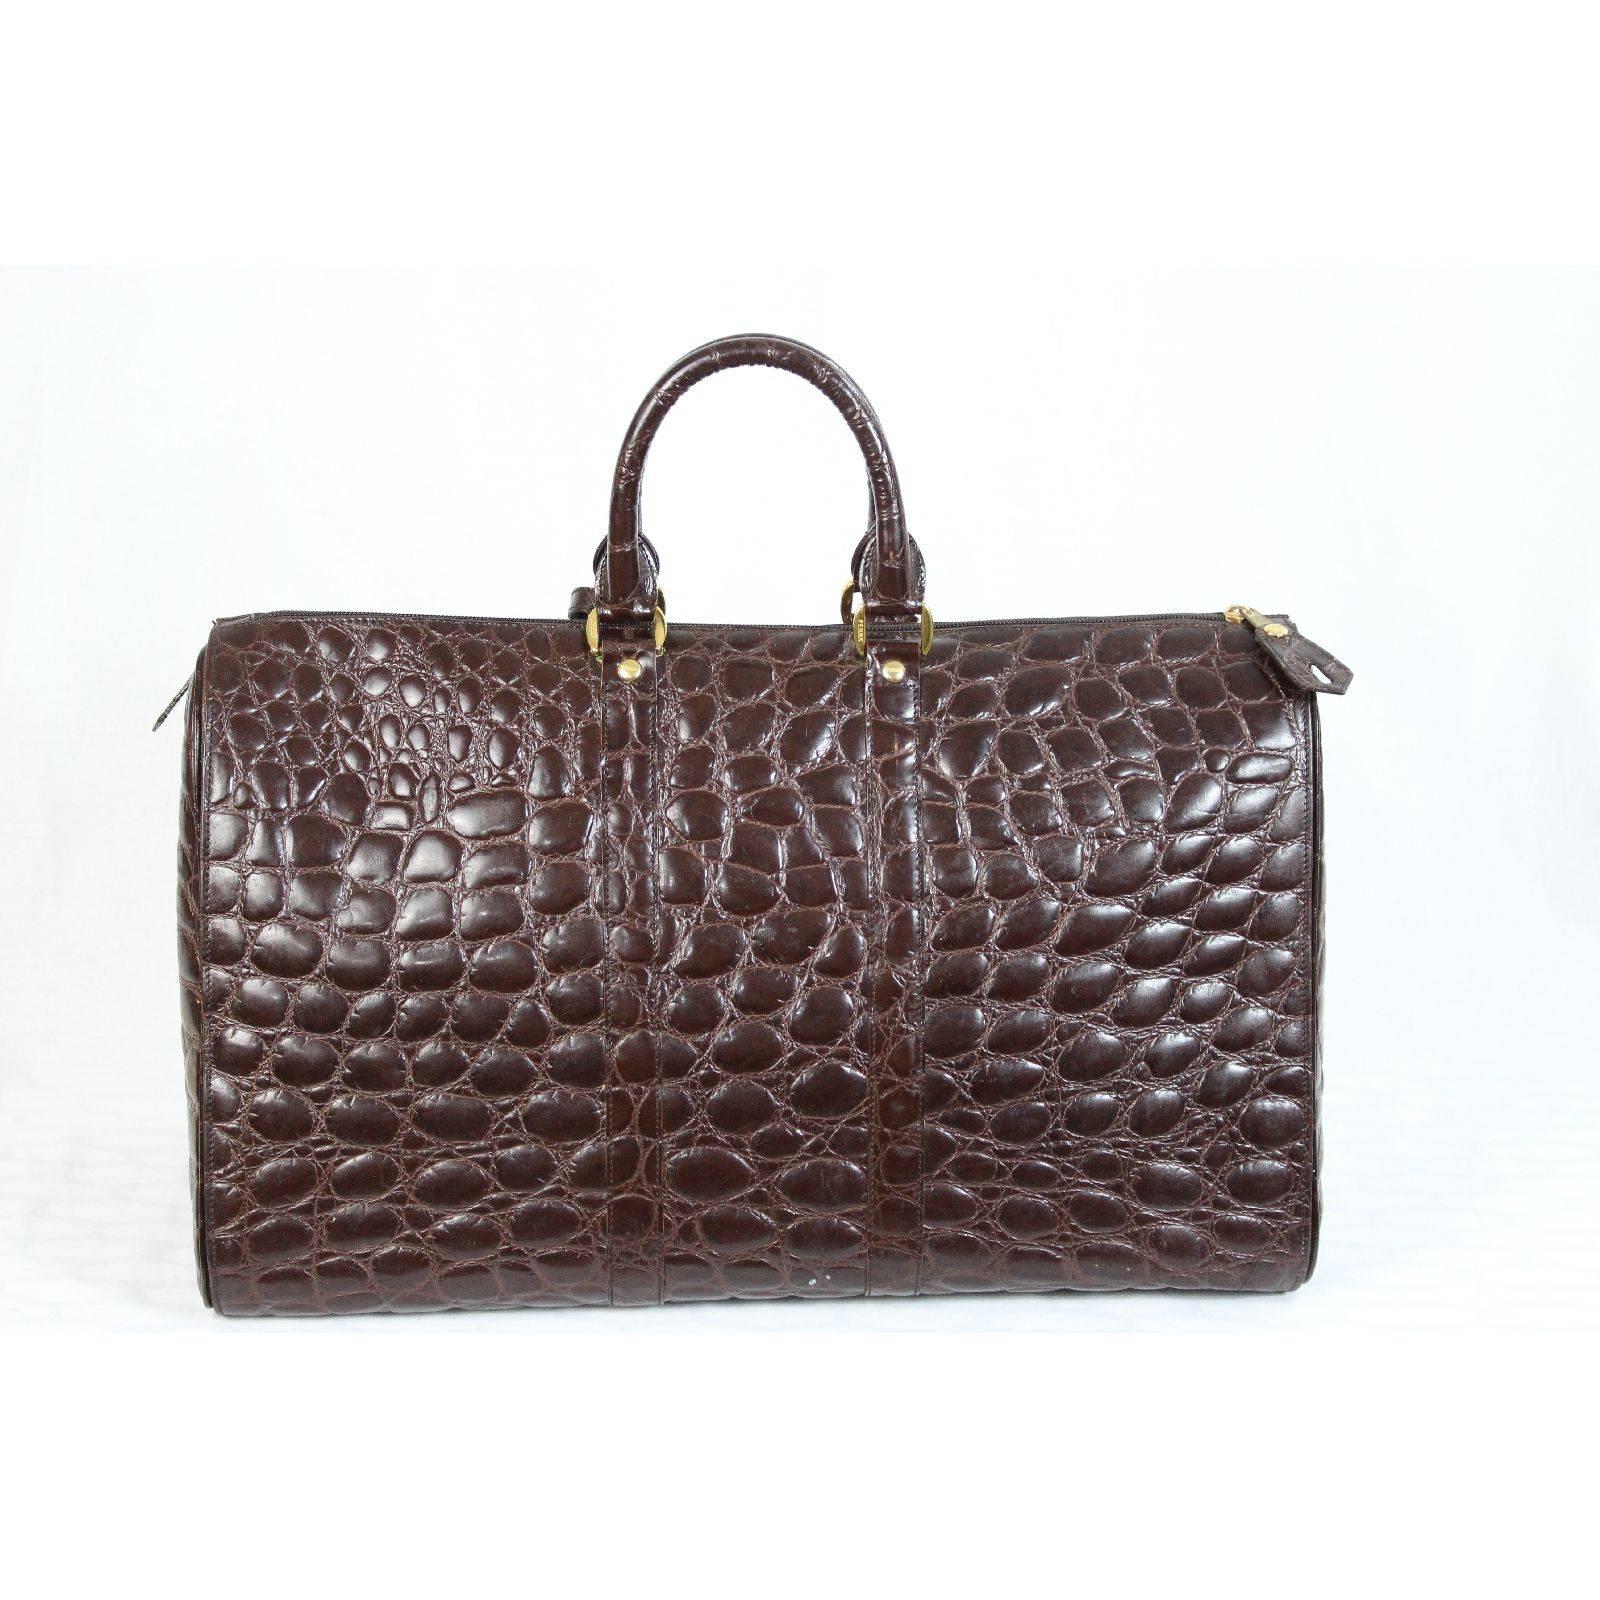 Gianfranco Ferre travel bag luggage brown calfskin embossed crocodile print 2